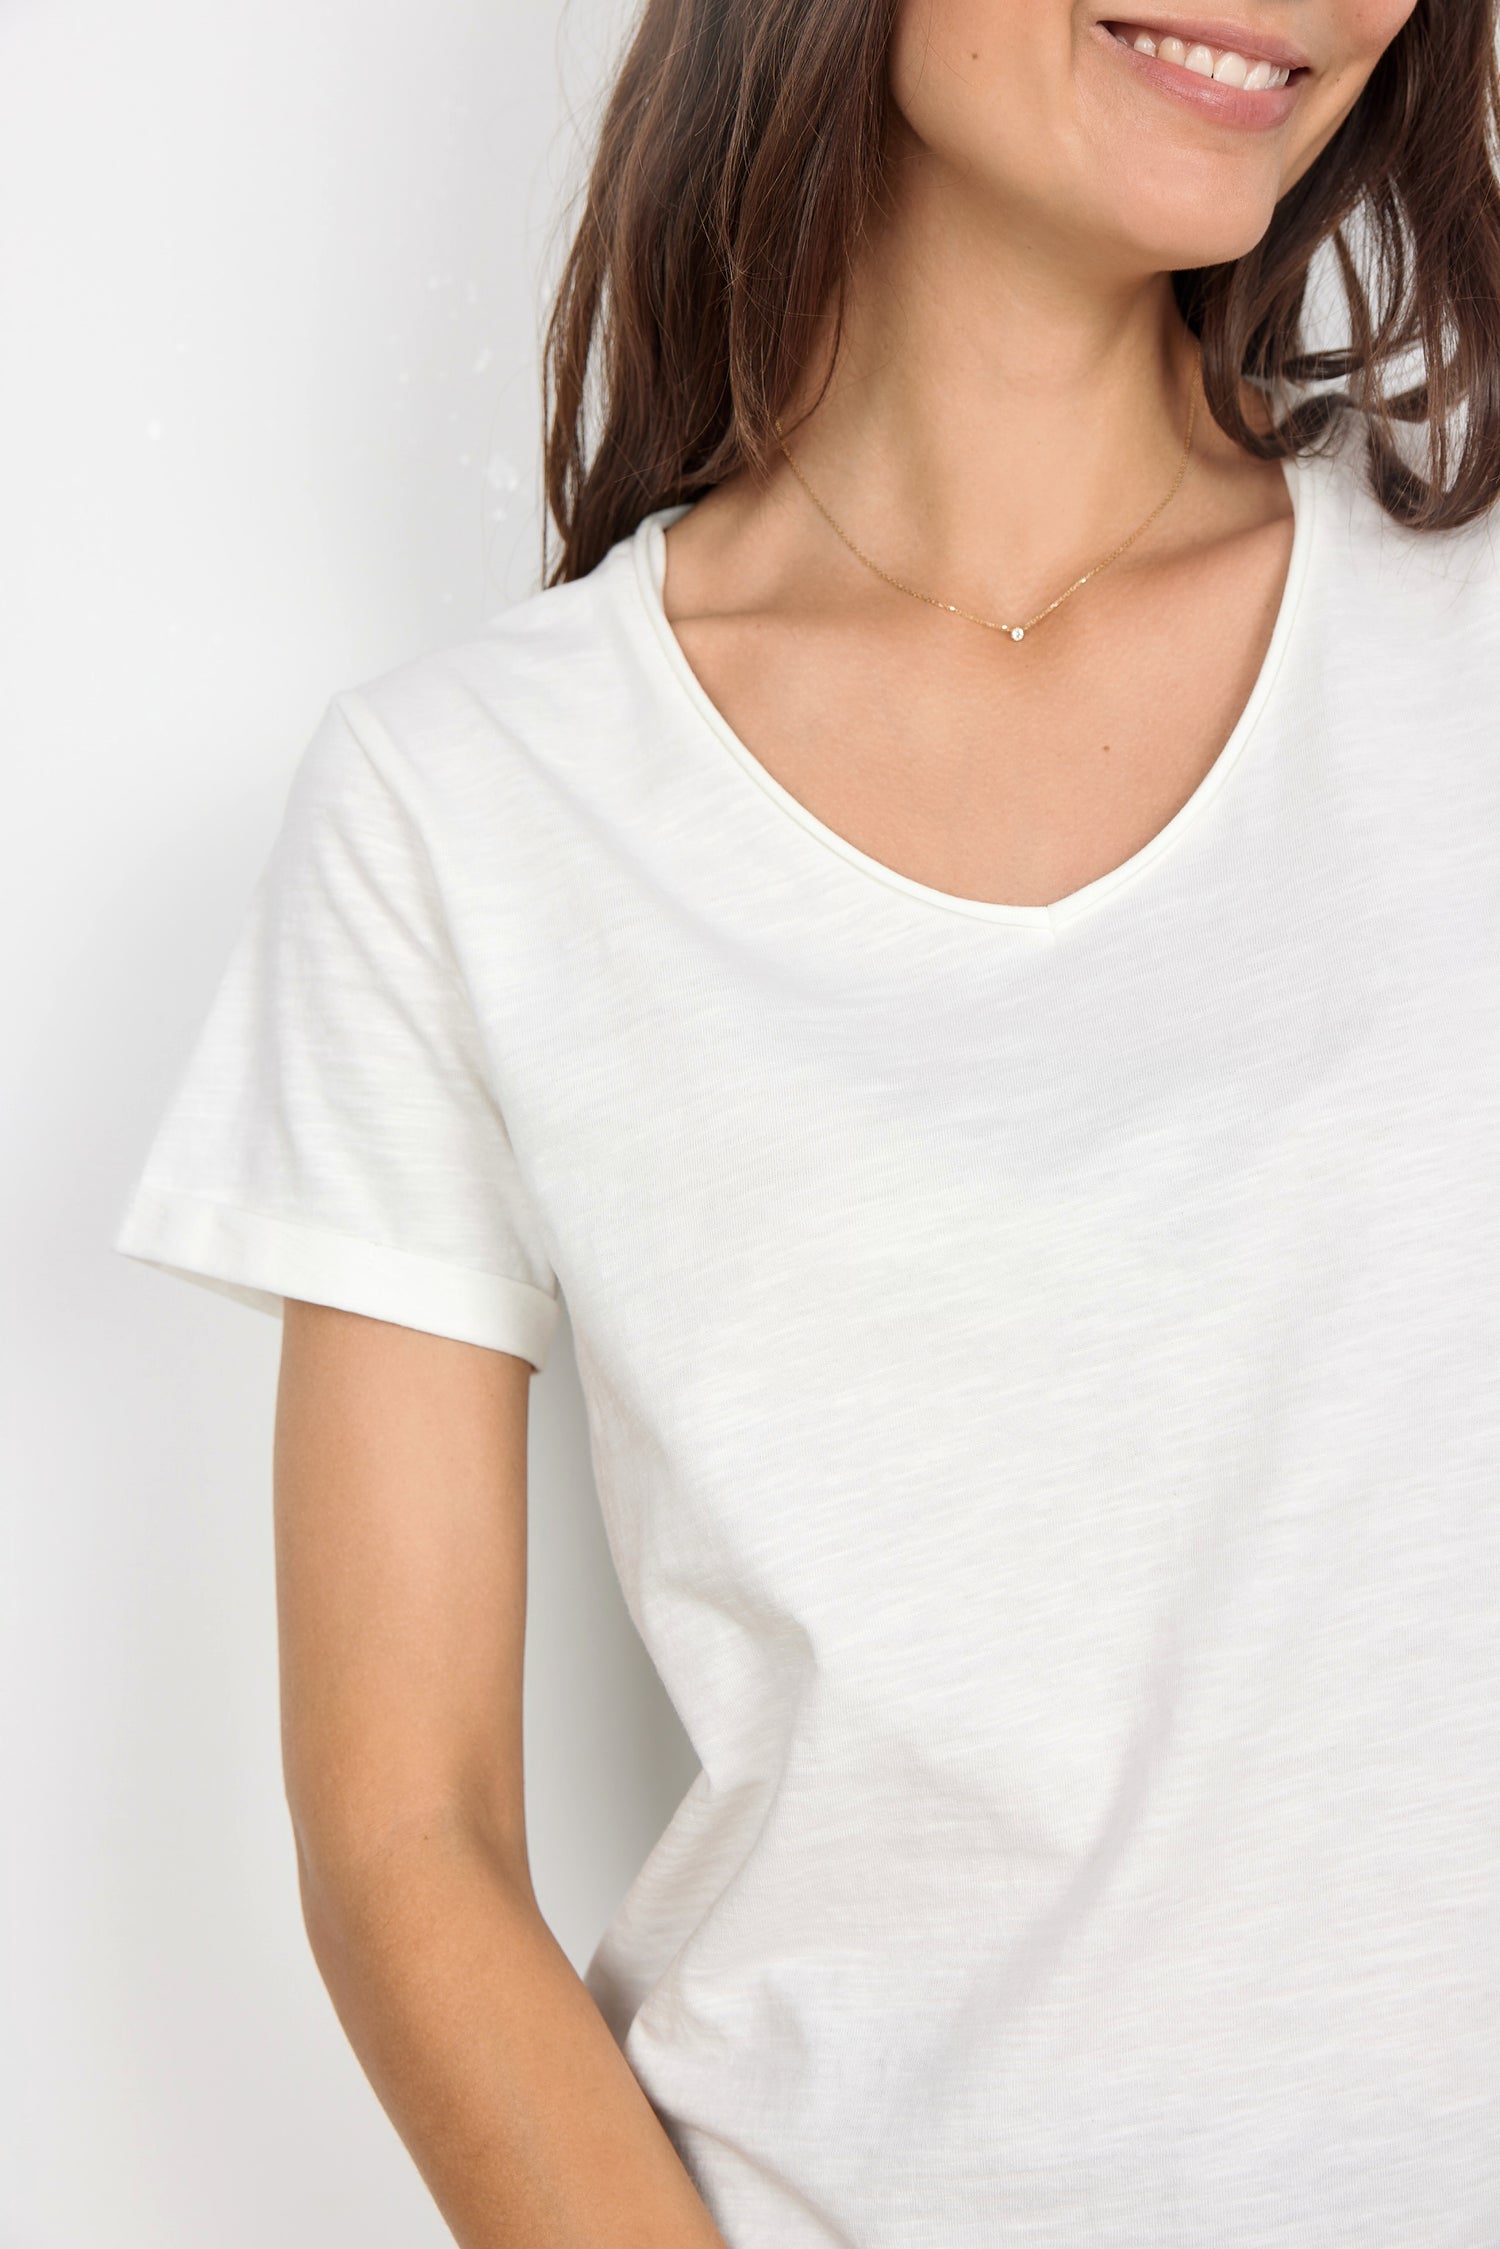 Soya Concept Babette Short Sleeve T-Shirt